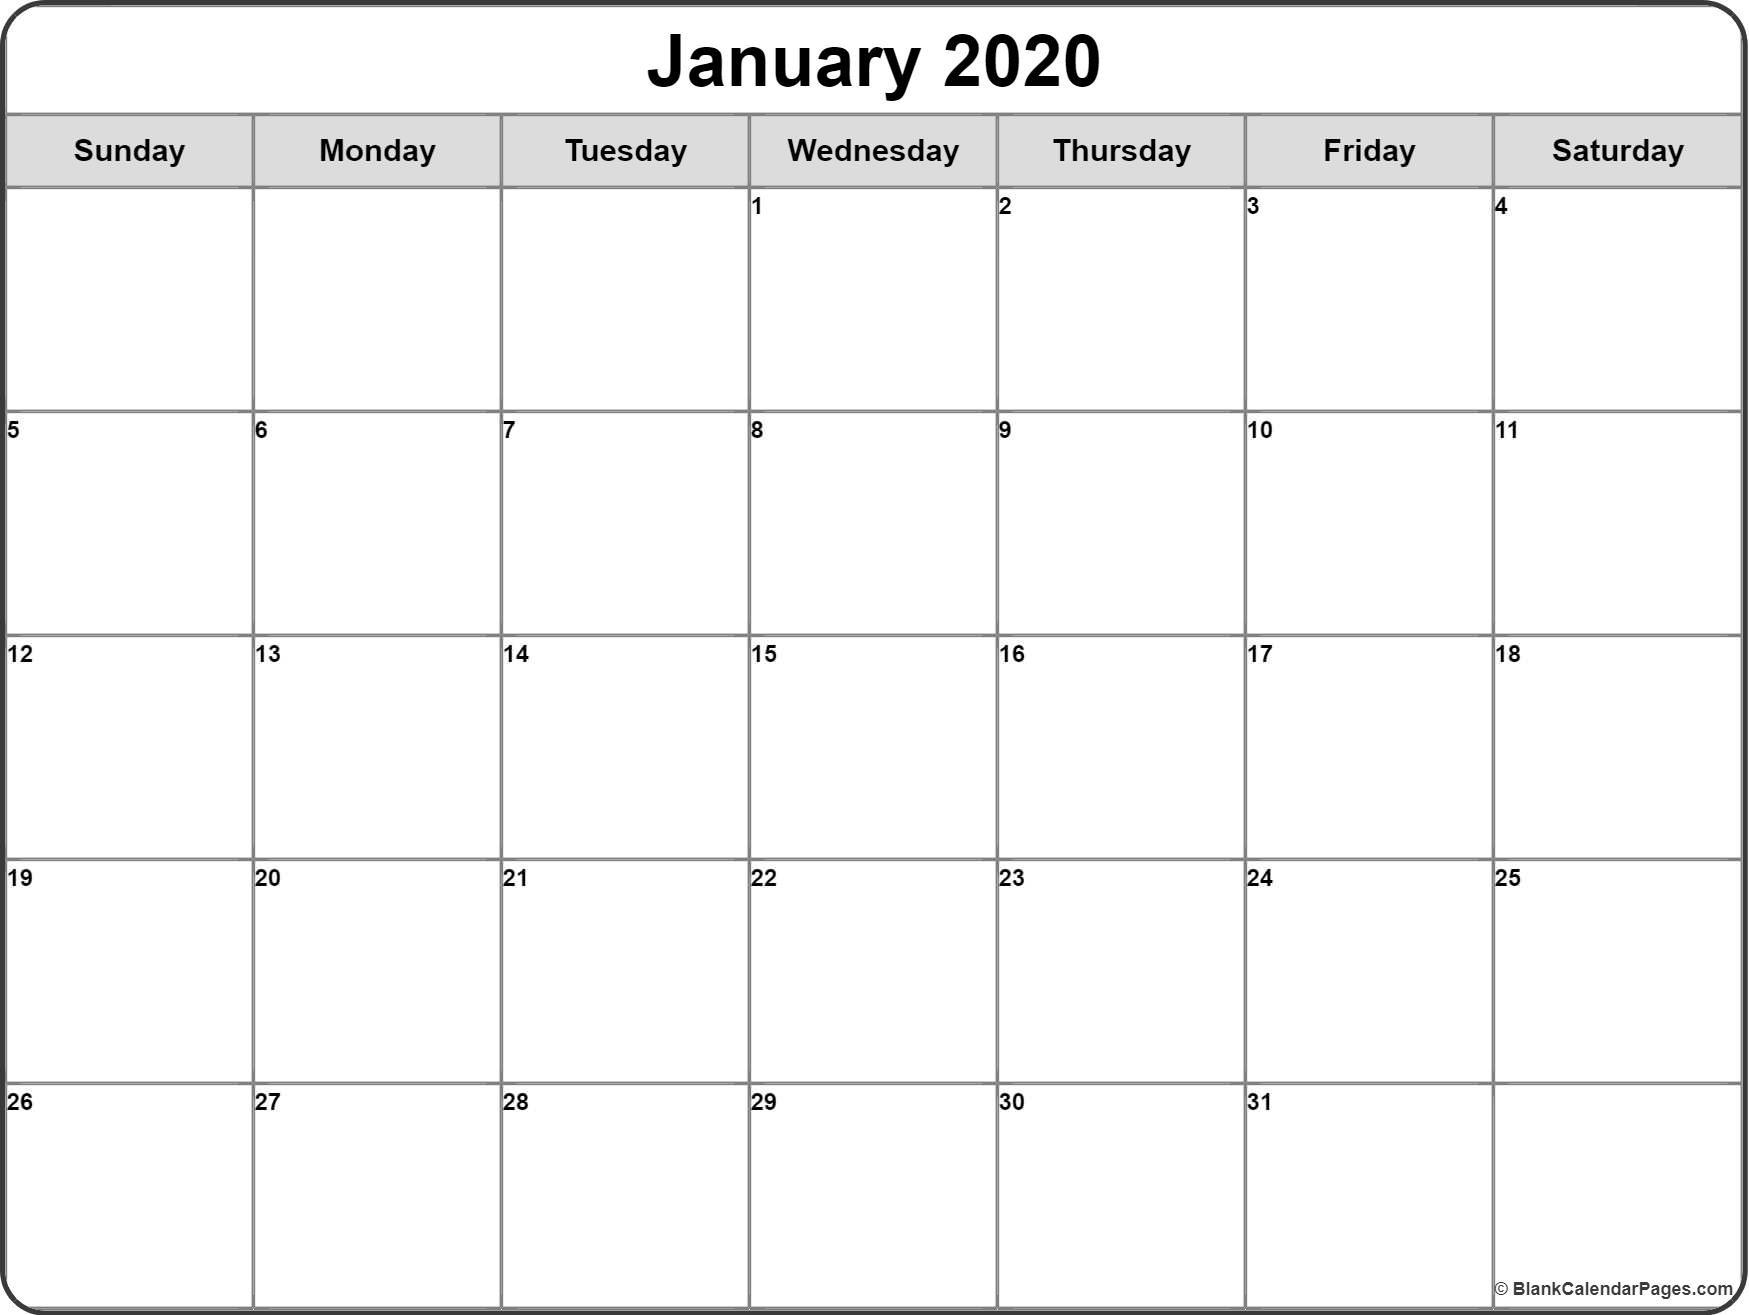 January 2020 calendar